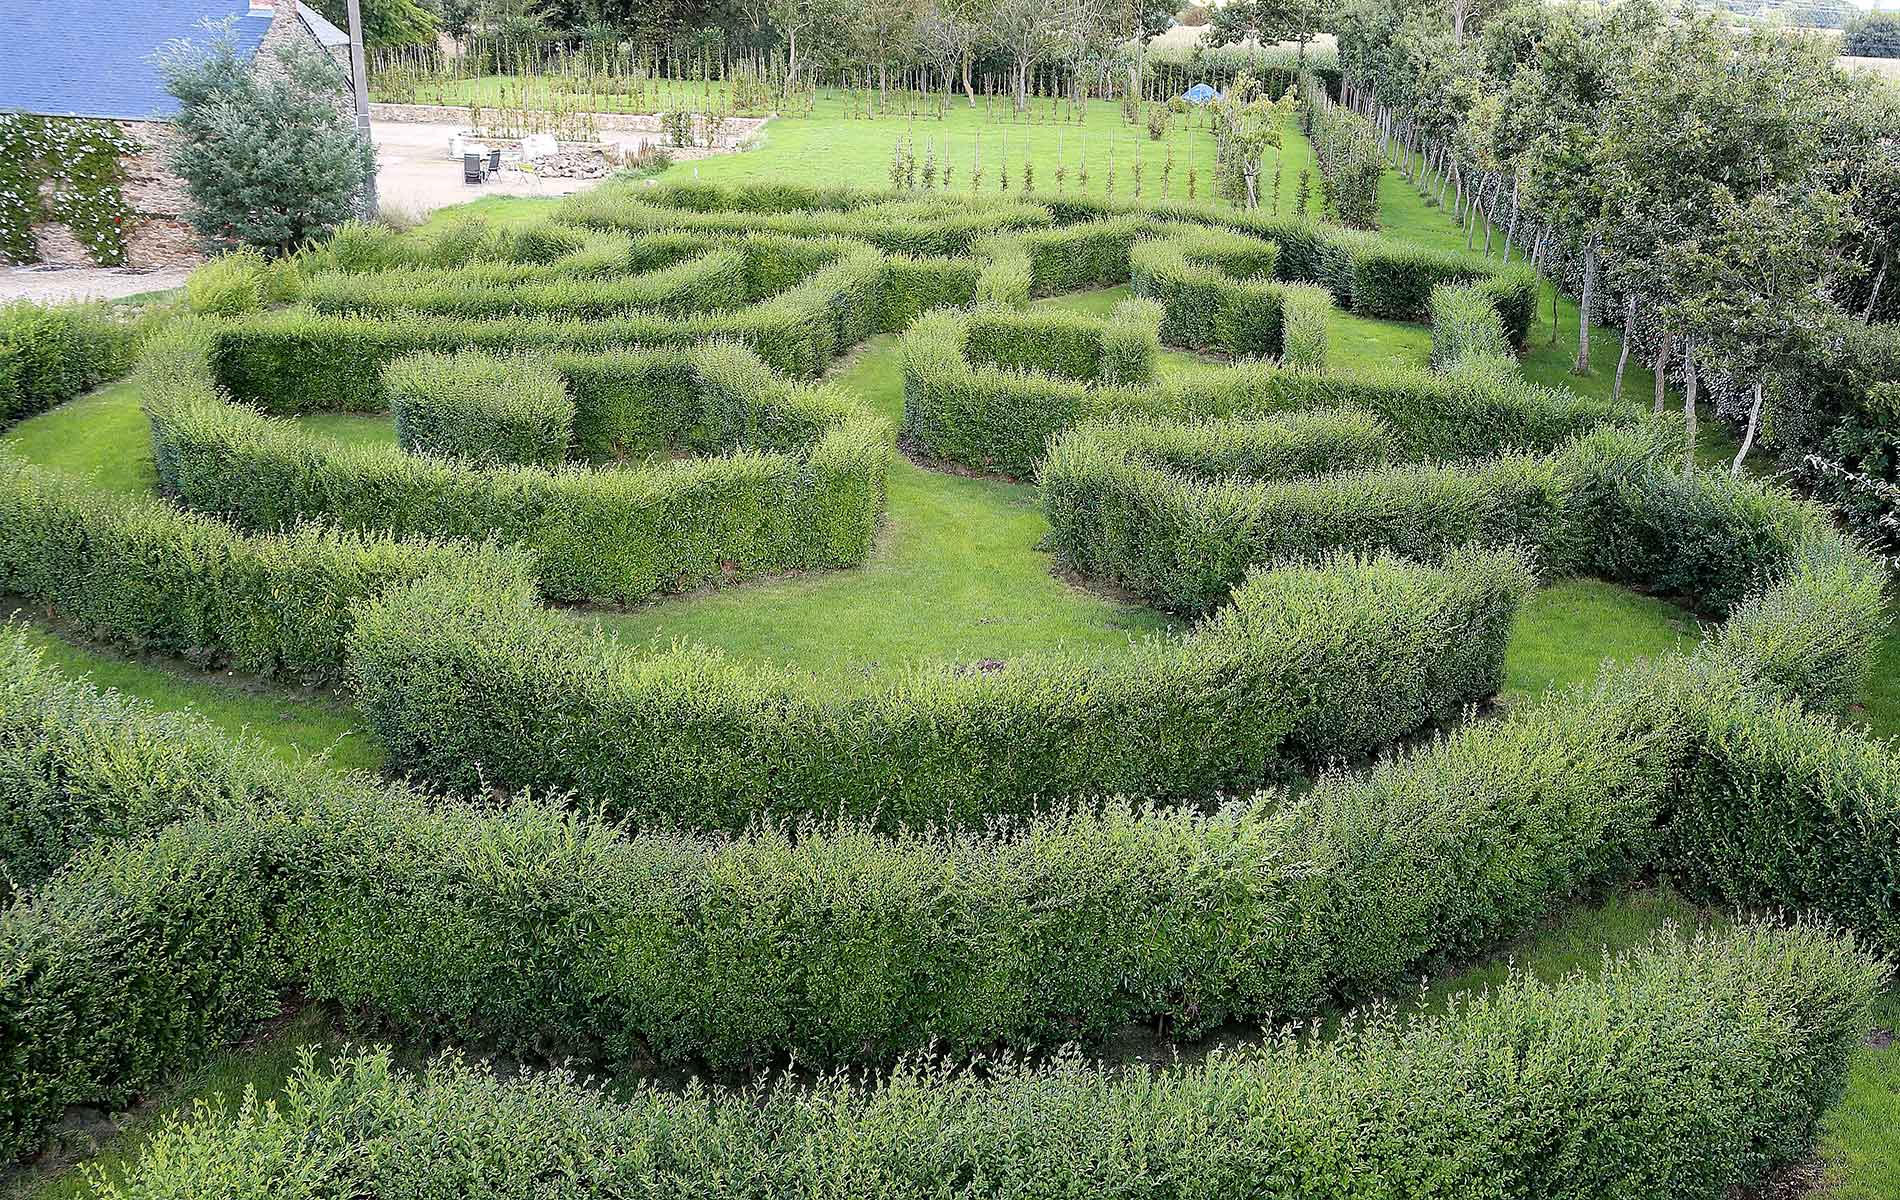 Clos Clin manor garden and labyrinth – Saint Malo